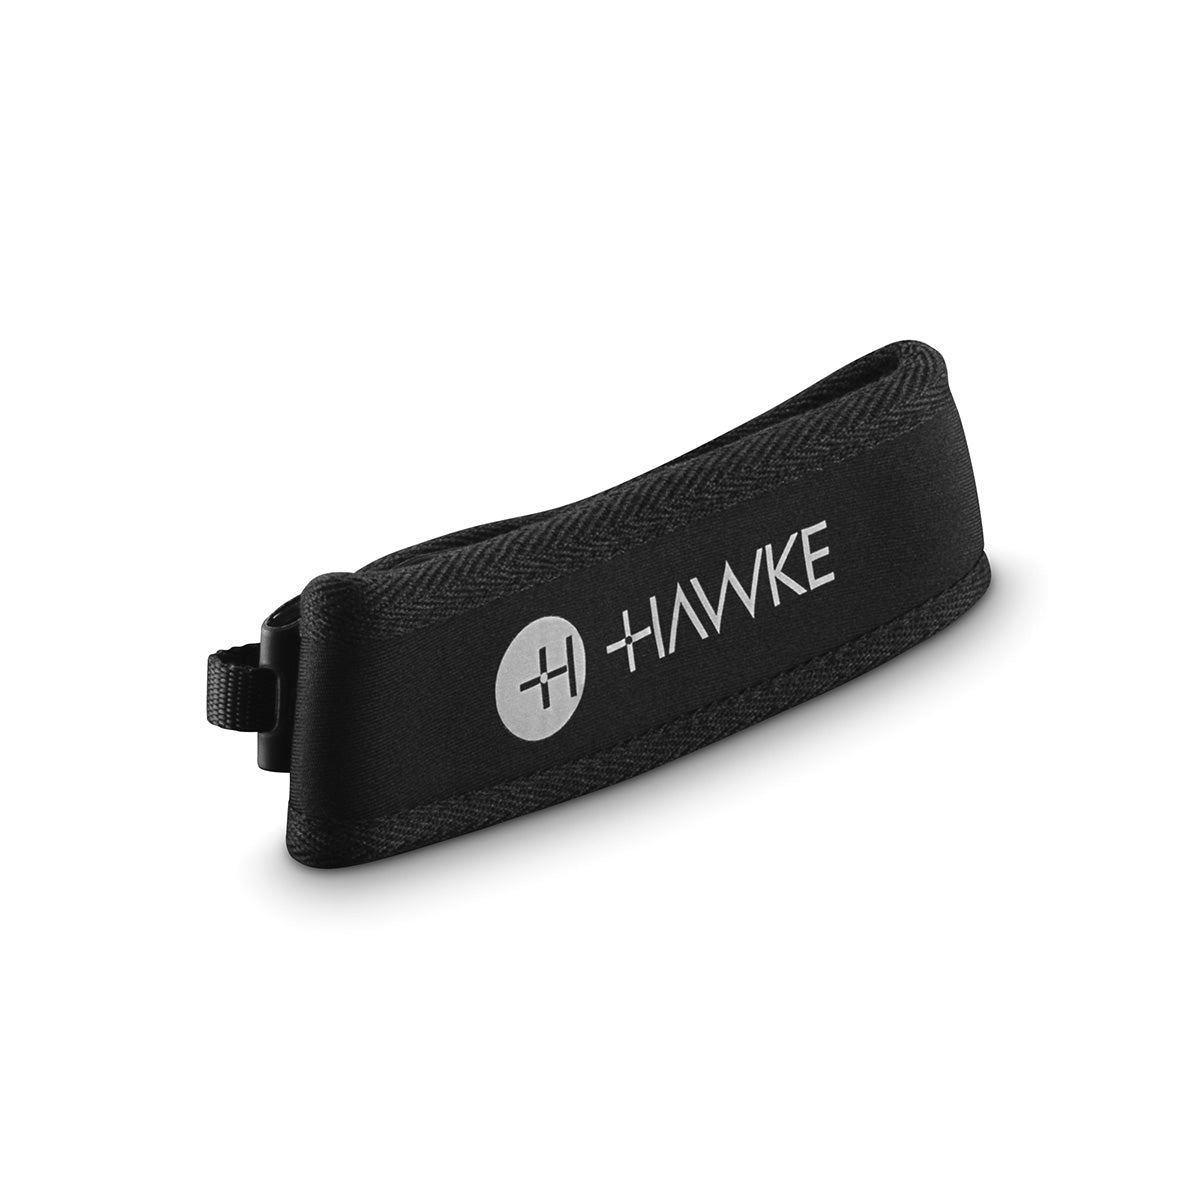 Hawke Frontier HD X 8x42 Binoculars - Green